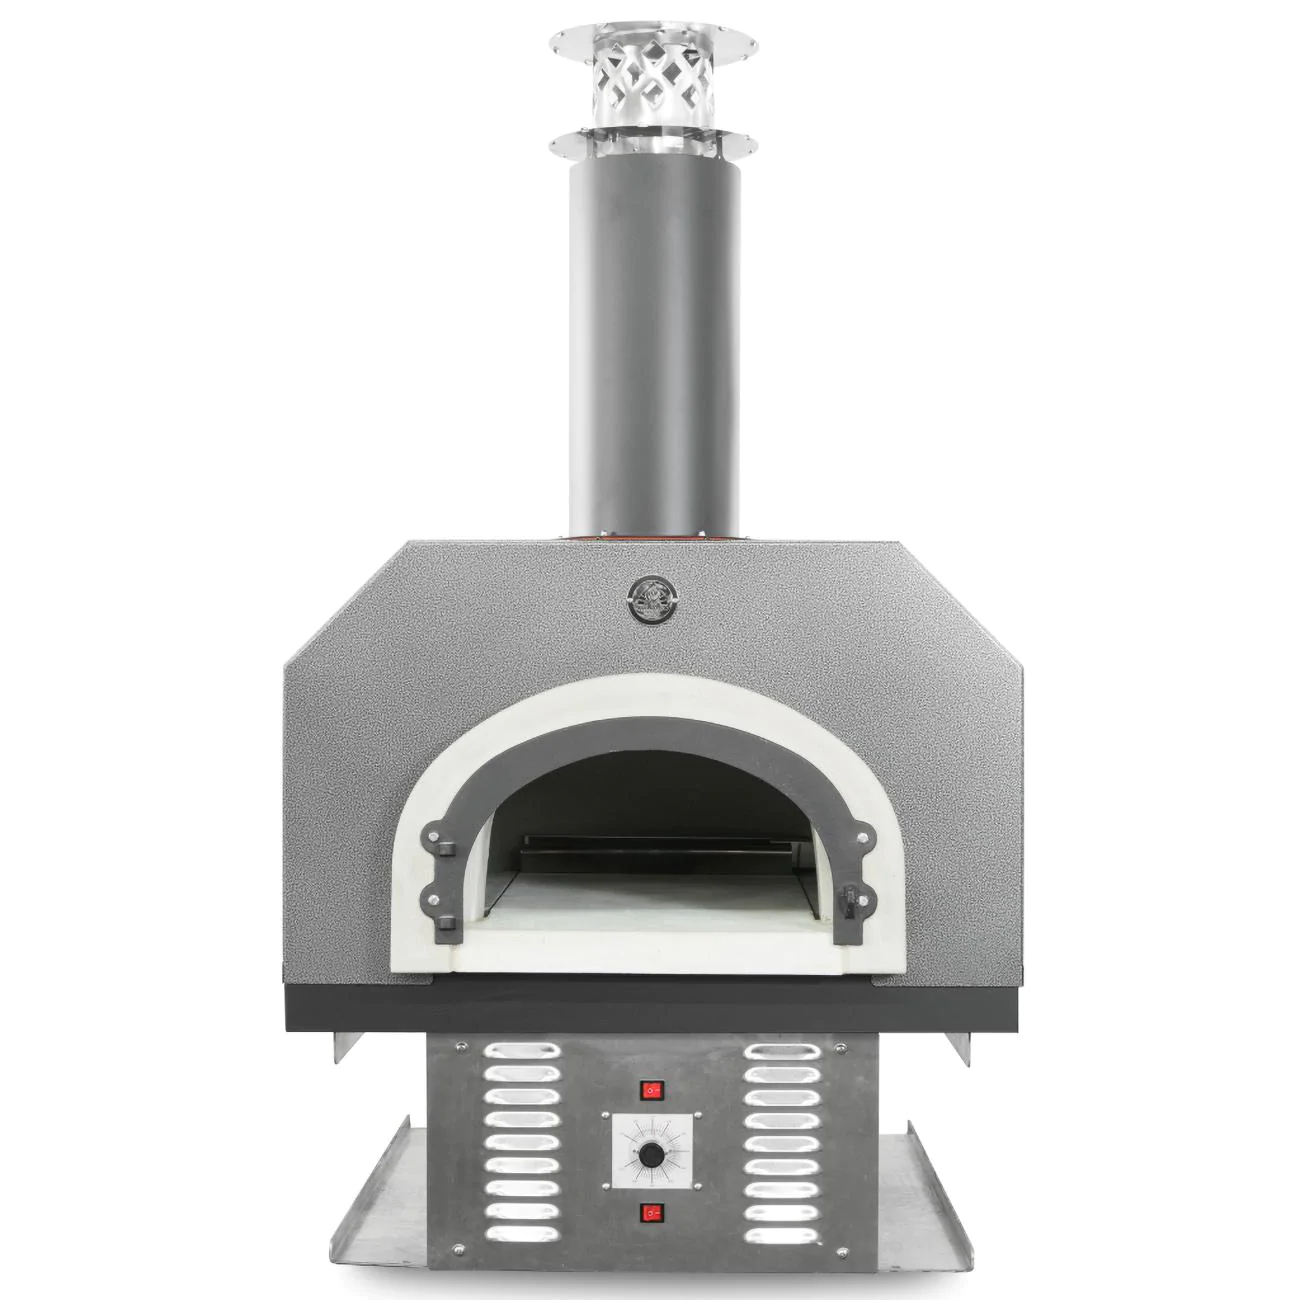 Chicago Brick Oven CBO 750 Hybrid DIY Pizza Oven Kit - Pro Pizza Ovens